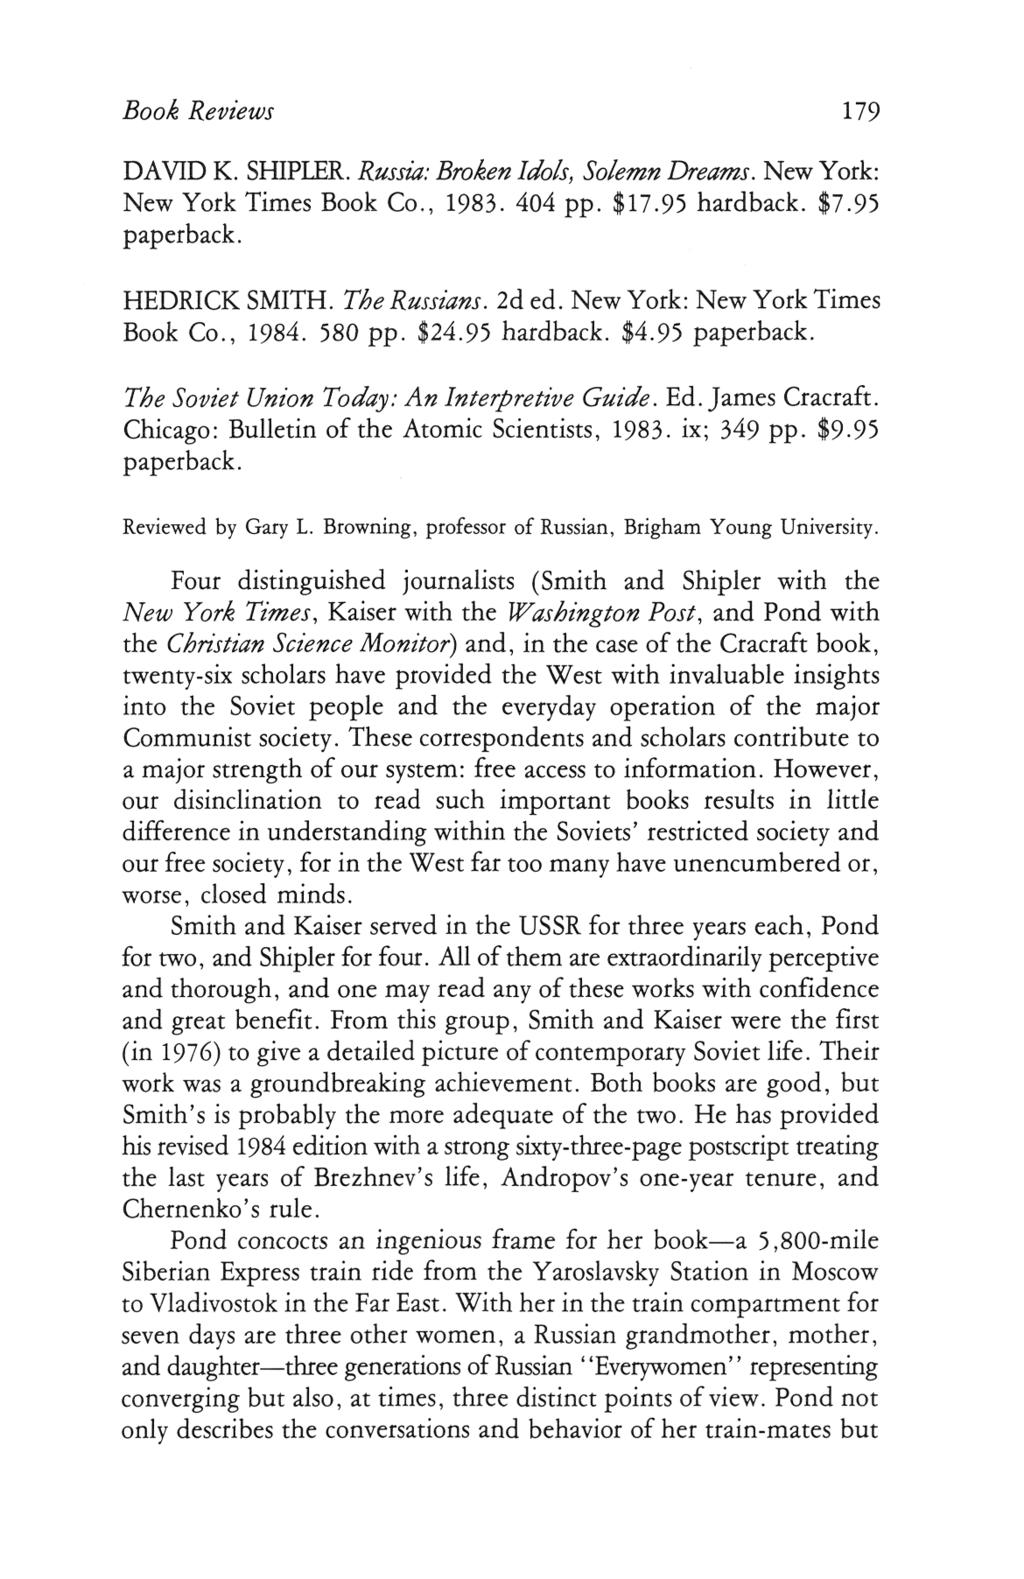 BYU Studies Quarterly, Vol. 25, Iss. 1 [1985], Art. 36 book reviews 179 DAVID K SHIPLER SHIPUER russia broken idols solemn dreams new york new york times book co 1983 404 pp ap 17.